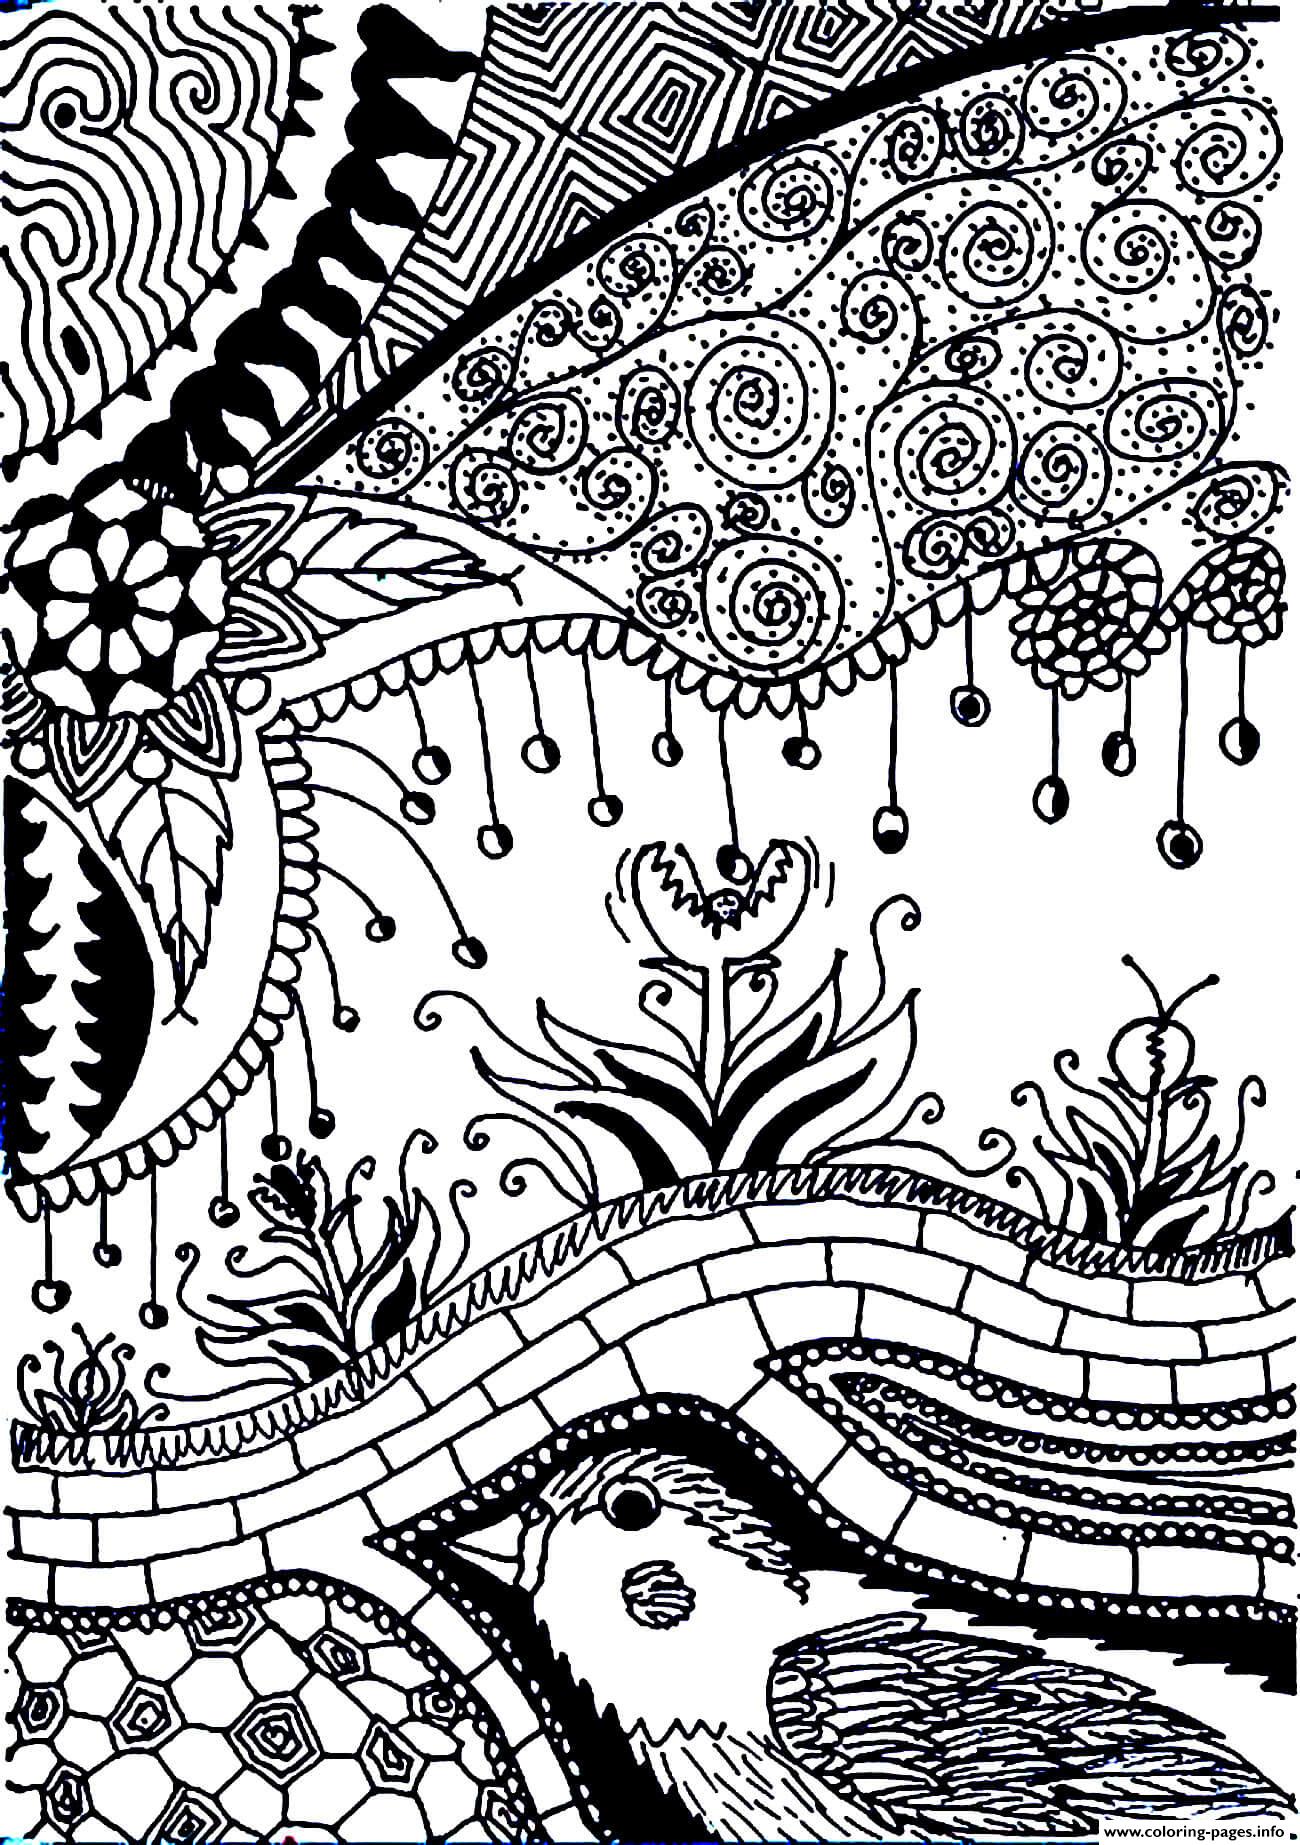 coloring adult flower adults zentangle doodle carnivorous classroom doodles flowers drawings patterns printable vegetation drawing mandala meeting zen zentangles tangle